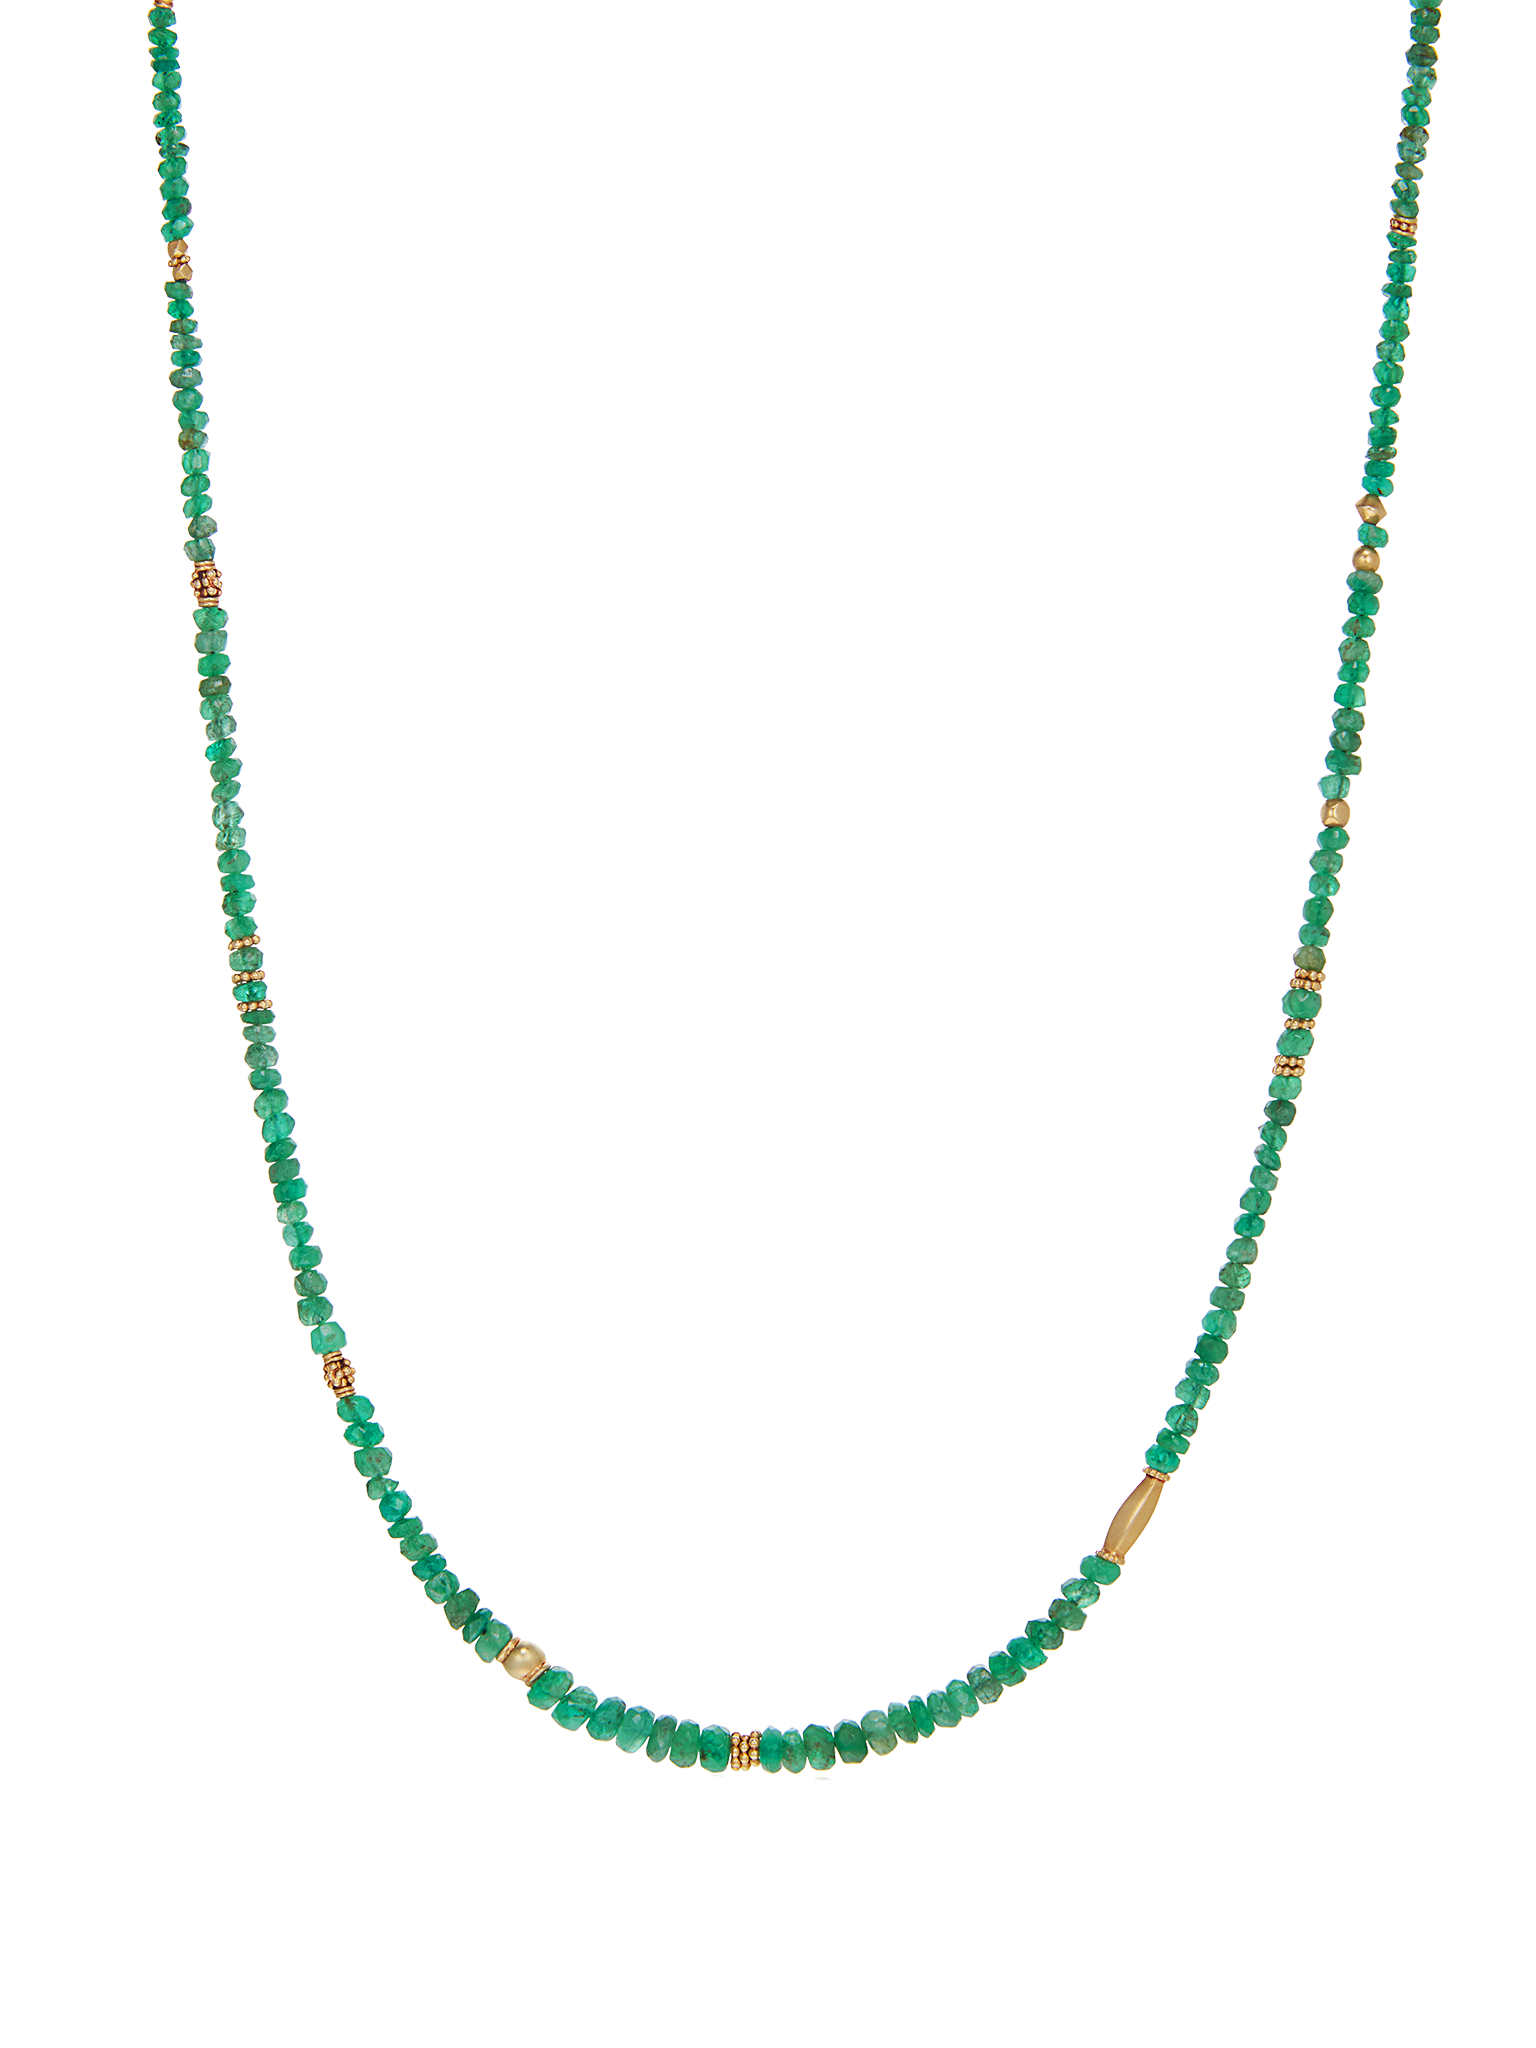 Emerald & fine gold bead necklace